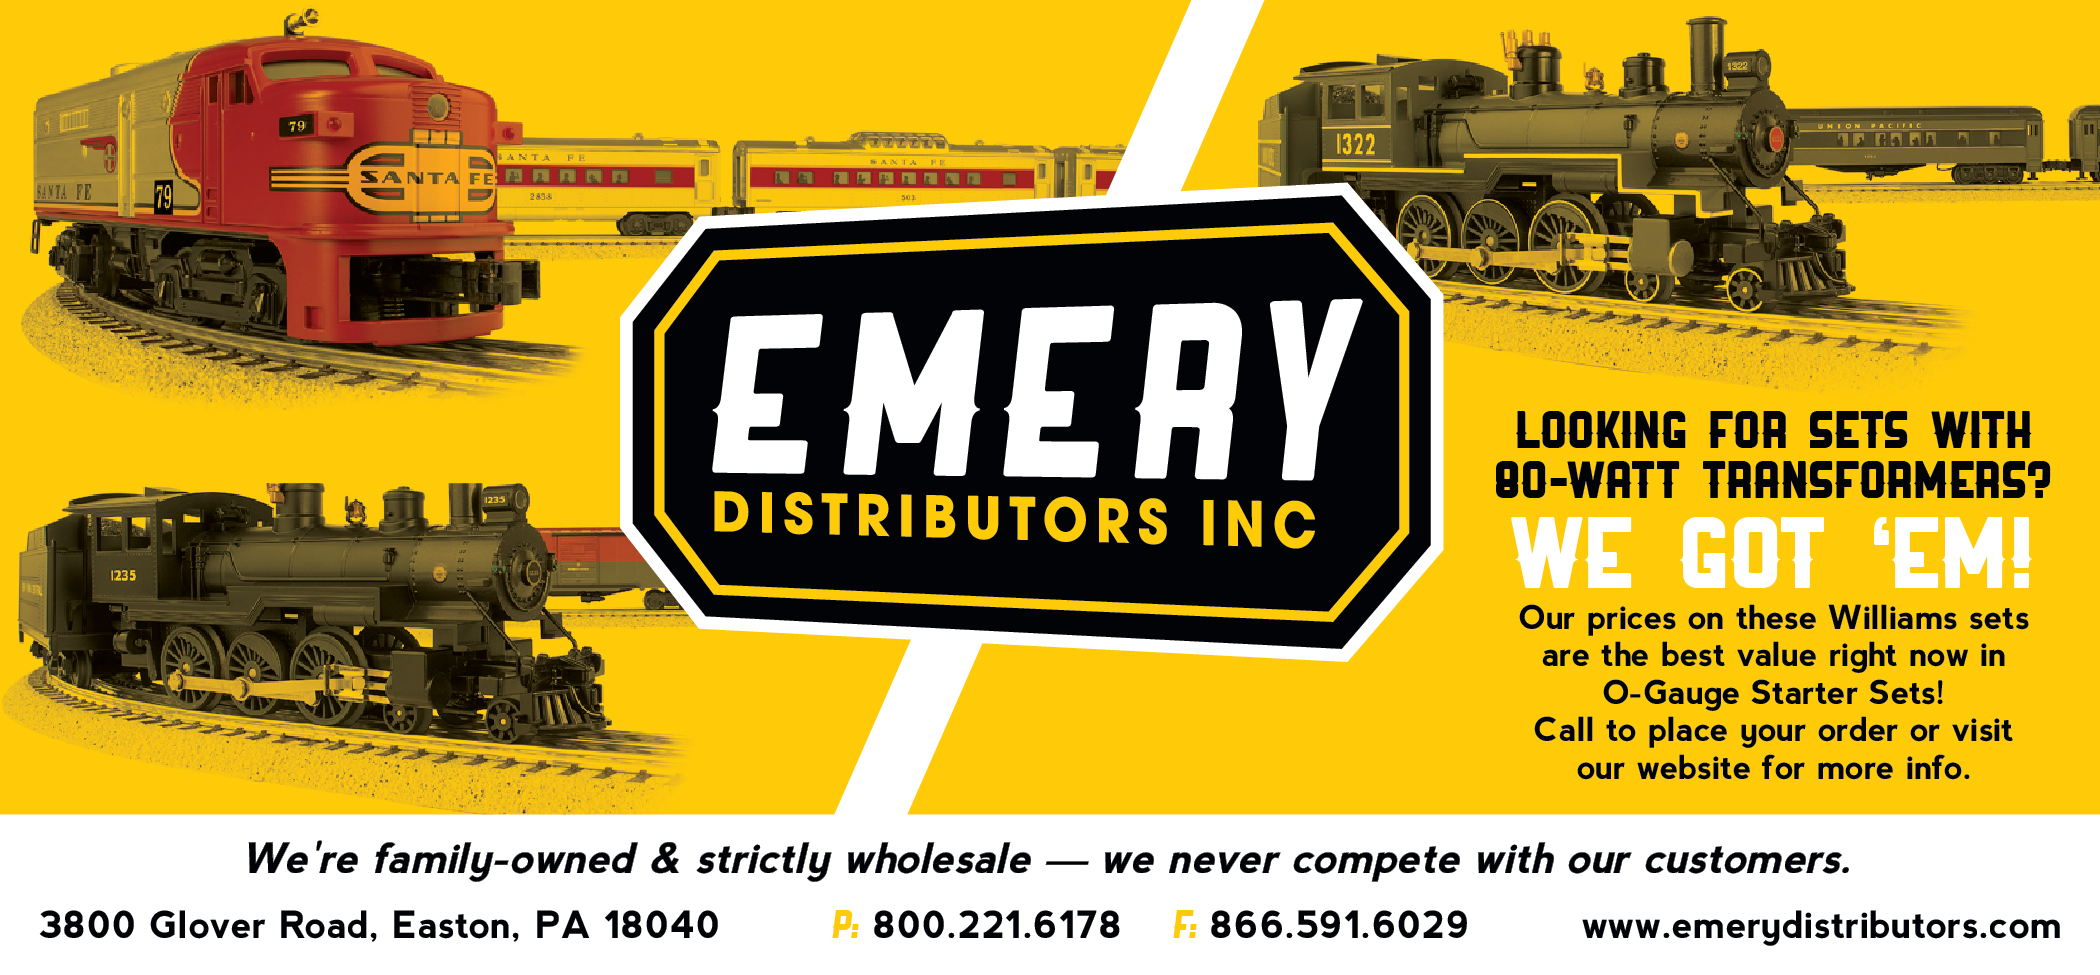 Emery Distributors Inc_SS-01.jpg